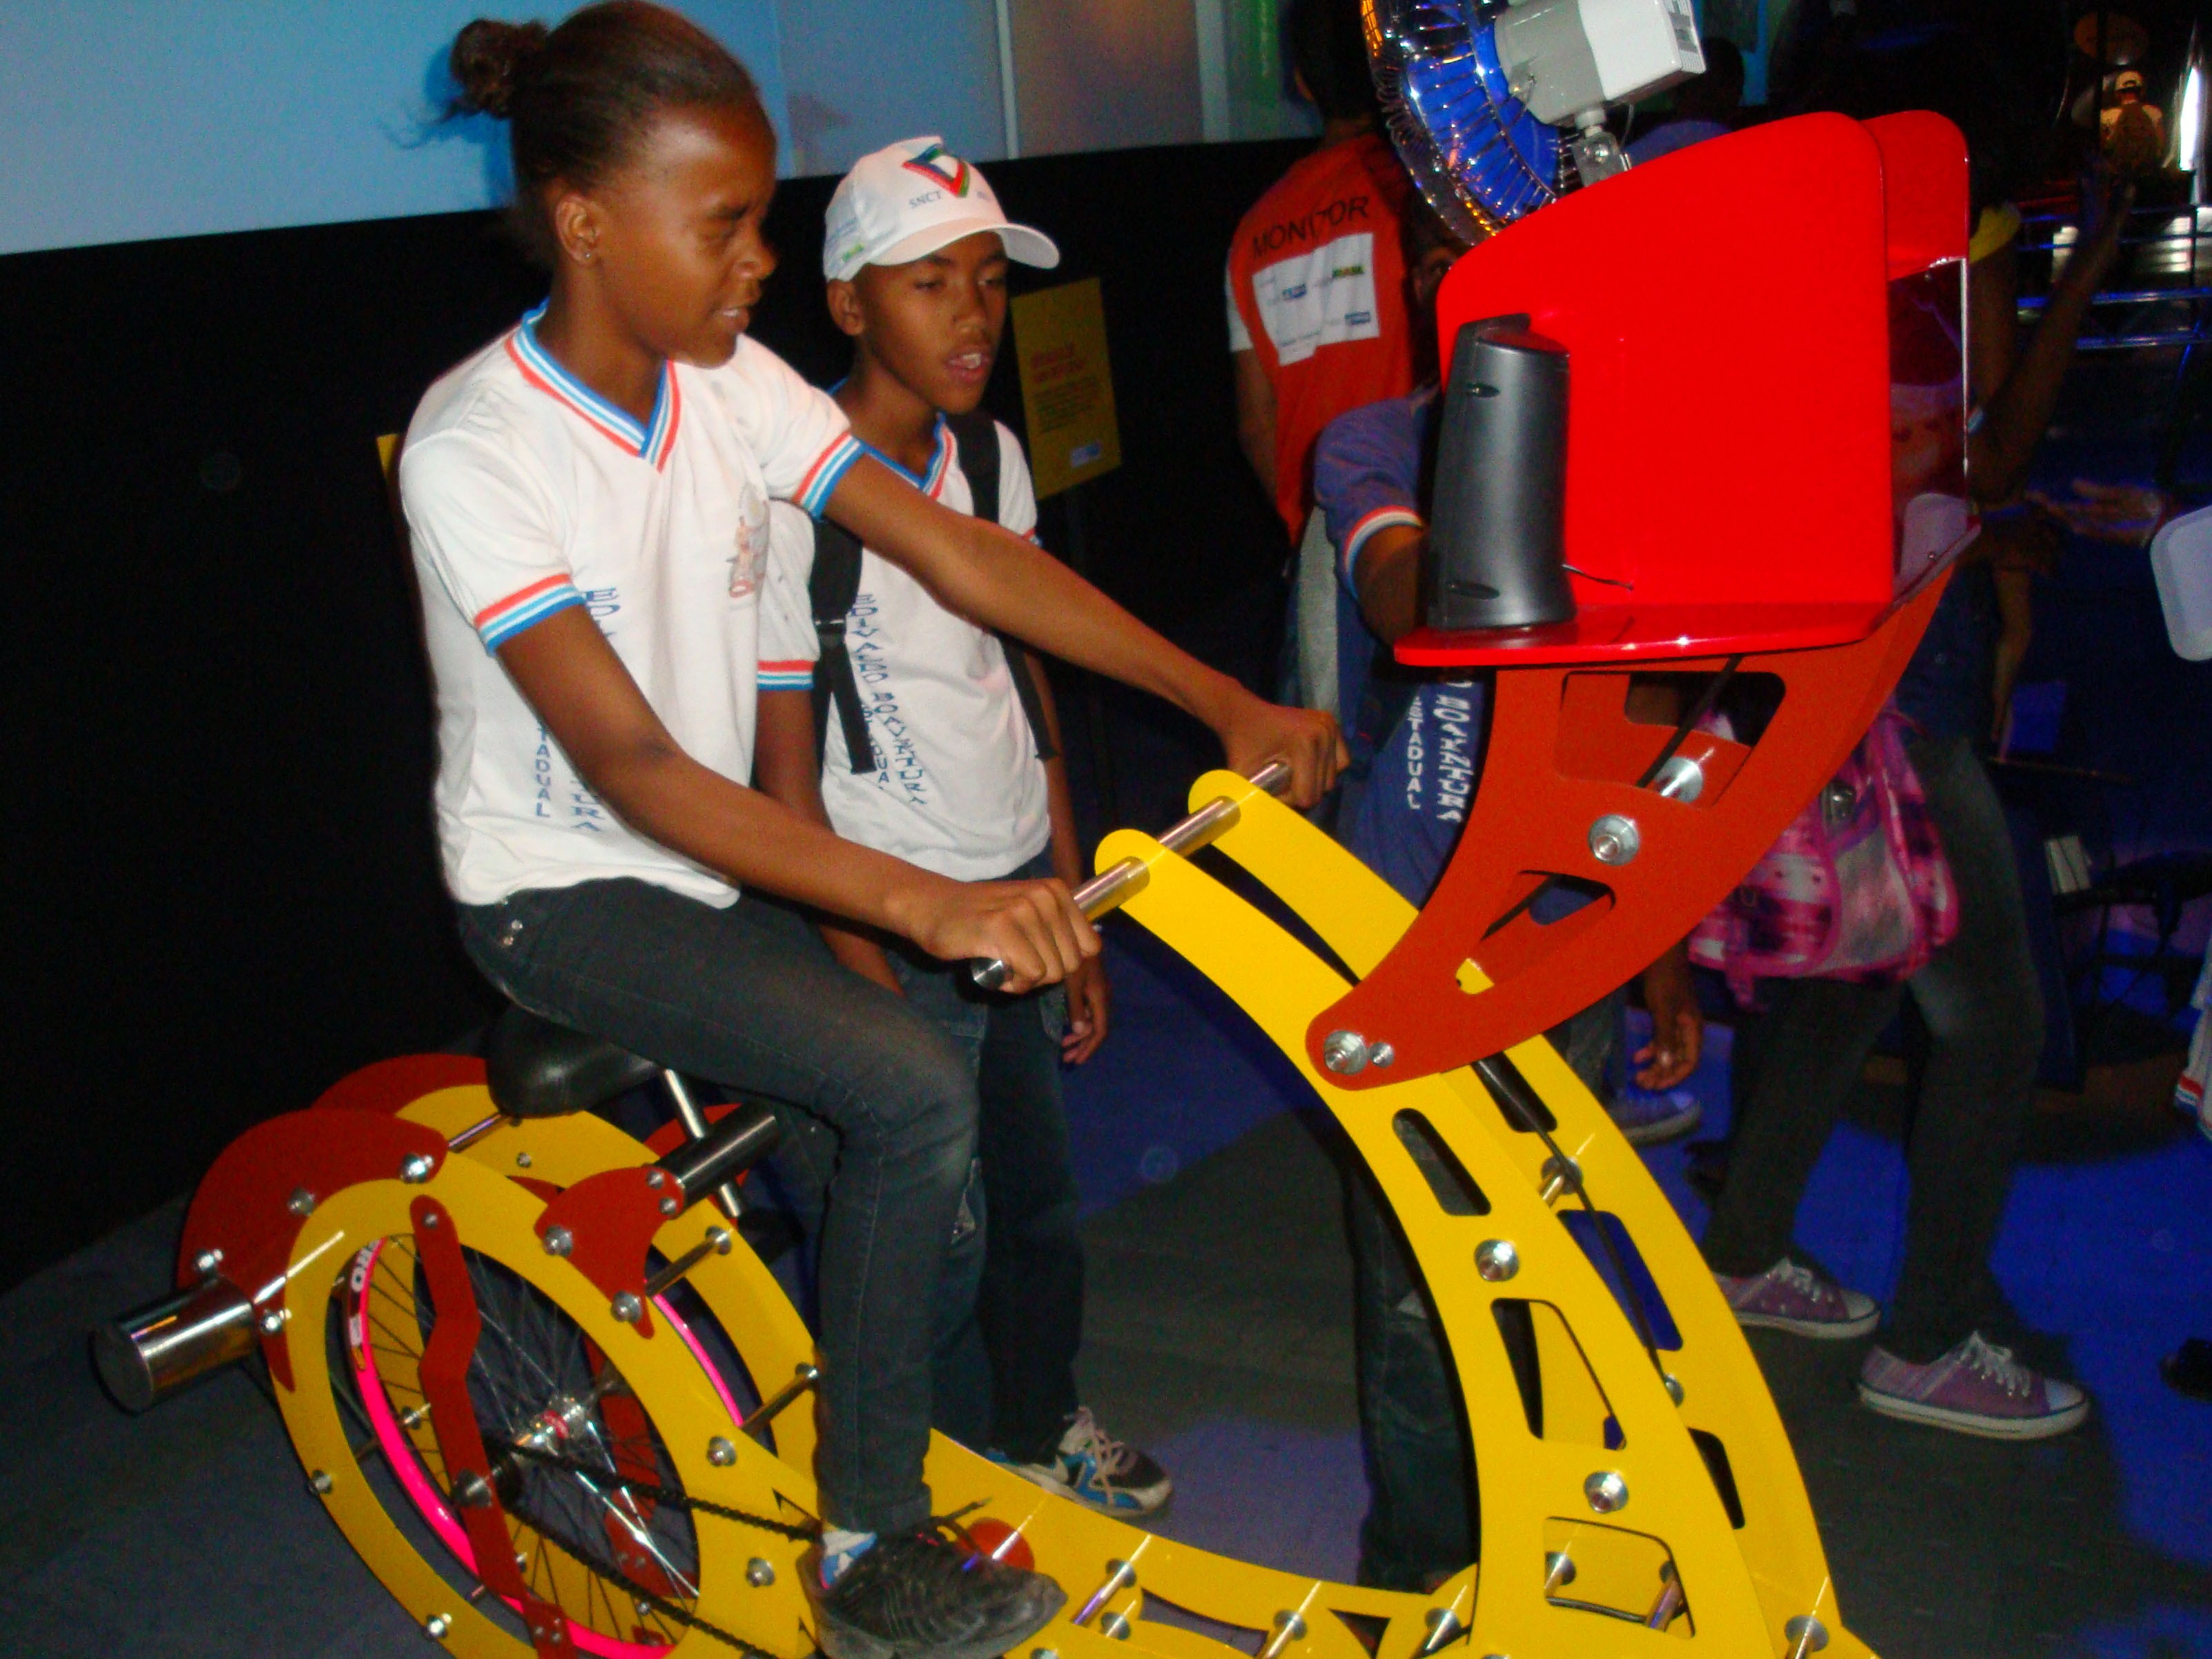 Jovens também se divertem na bicicleta geradora (Foto: Ruan Melo/G1)